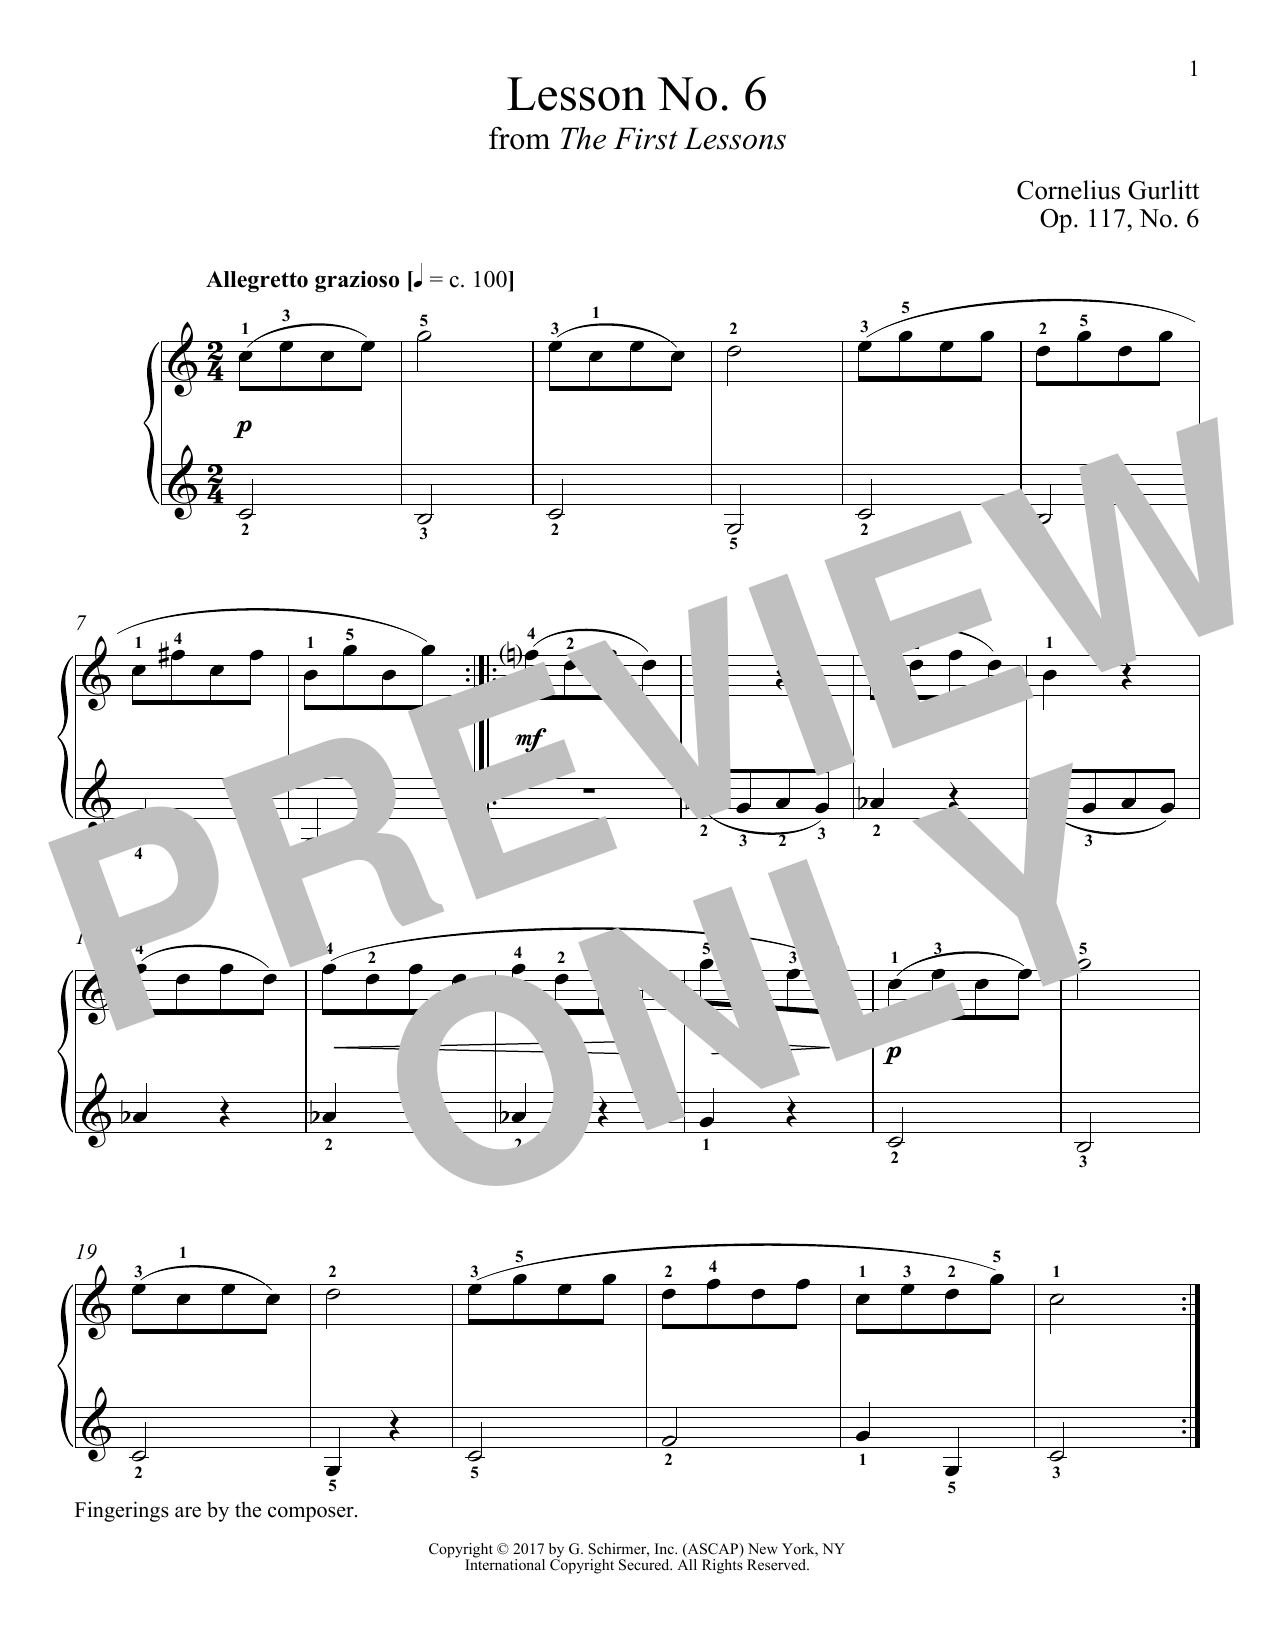 Download Cornelius Gurlitt Allegretto grazioso, Op. 117, No. 6 Sheet Music and learn how to play Piano PDF digital score in minutes